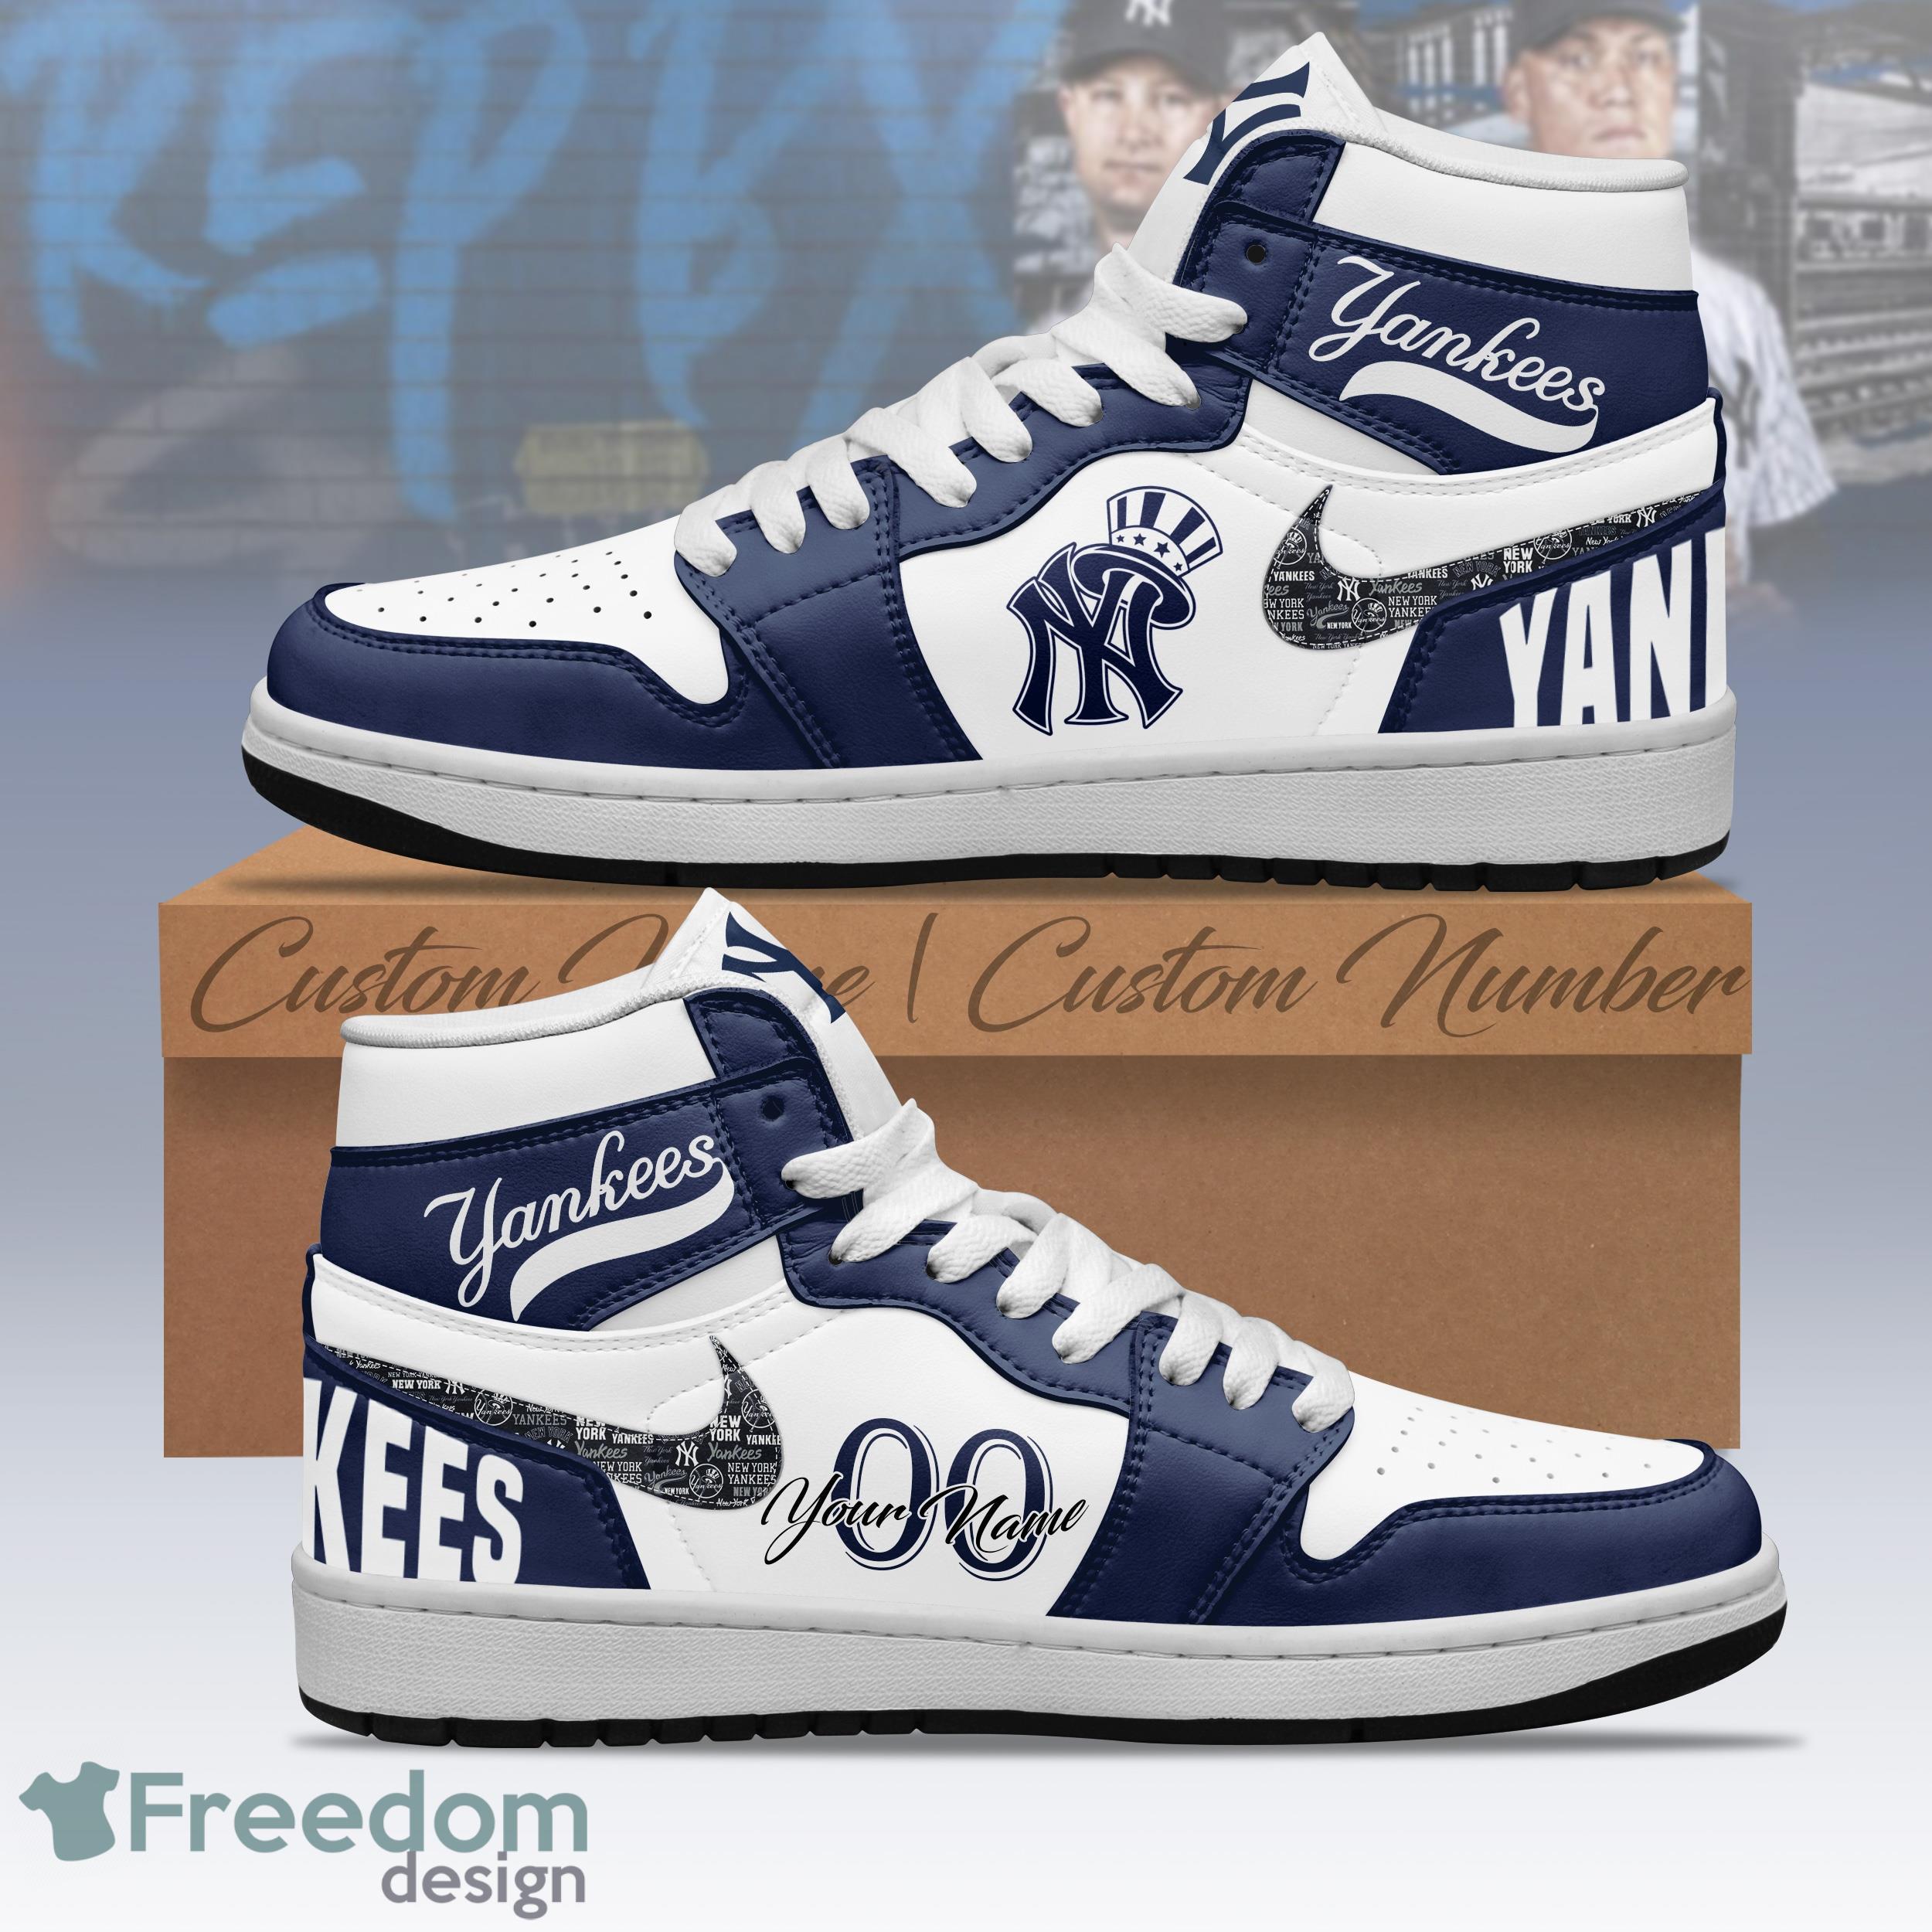 NY Yankees test 1 High Top Air Jordan Custom Name - Freedomdesign